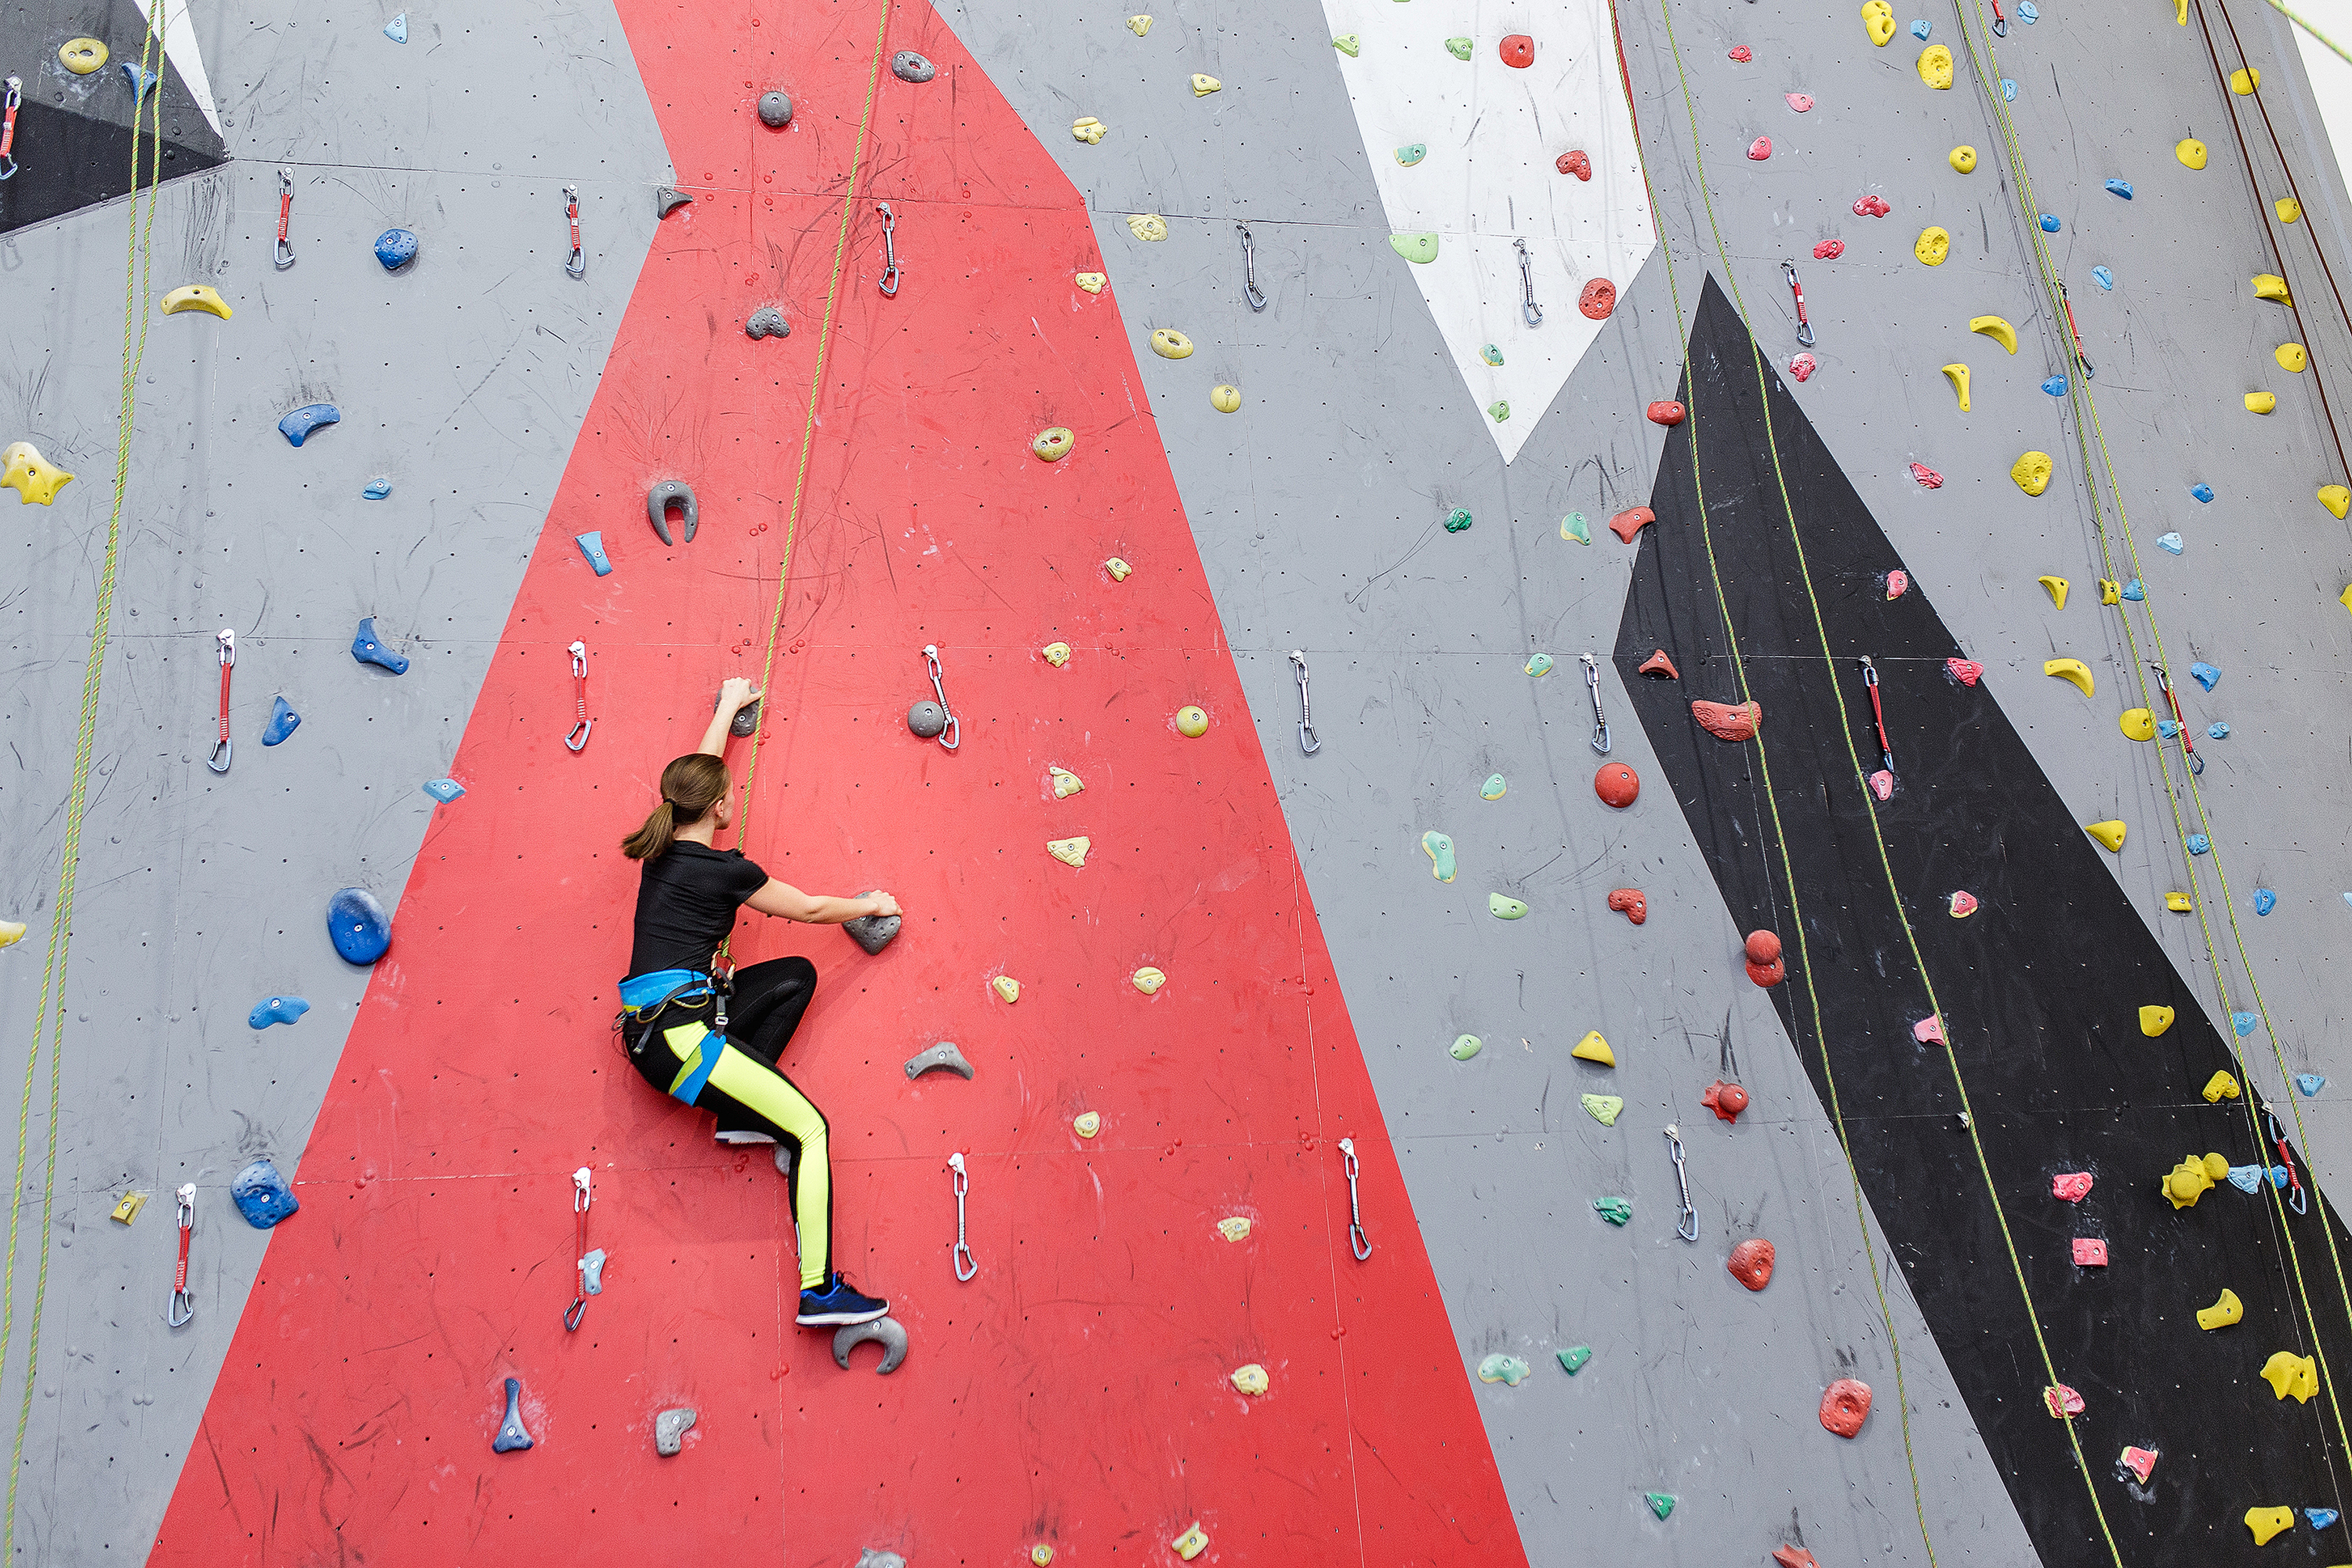 Oman sport: Try wall climbing in Muscat